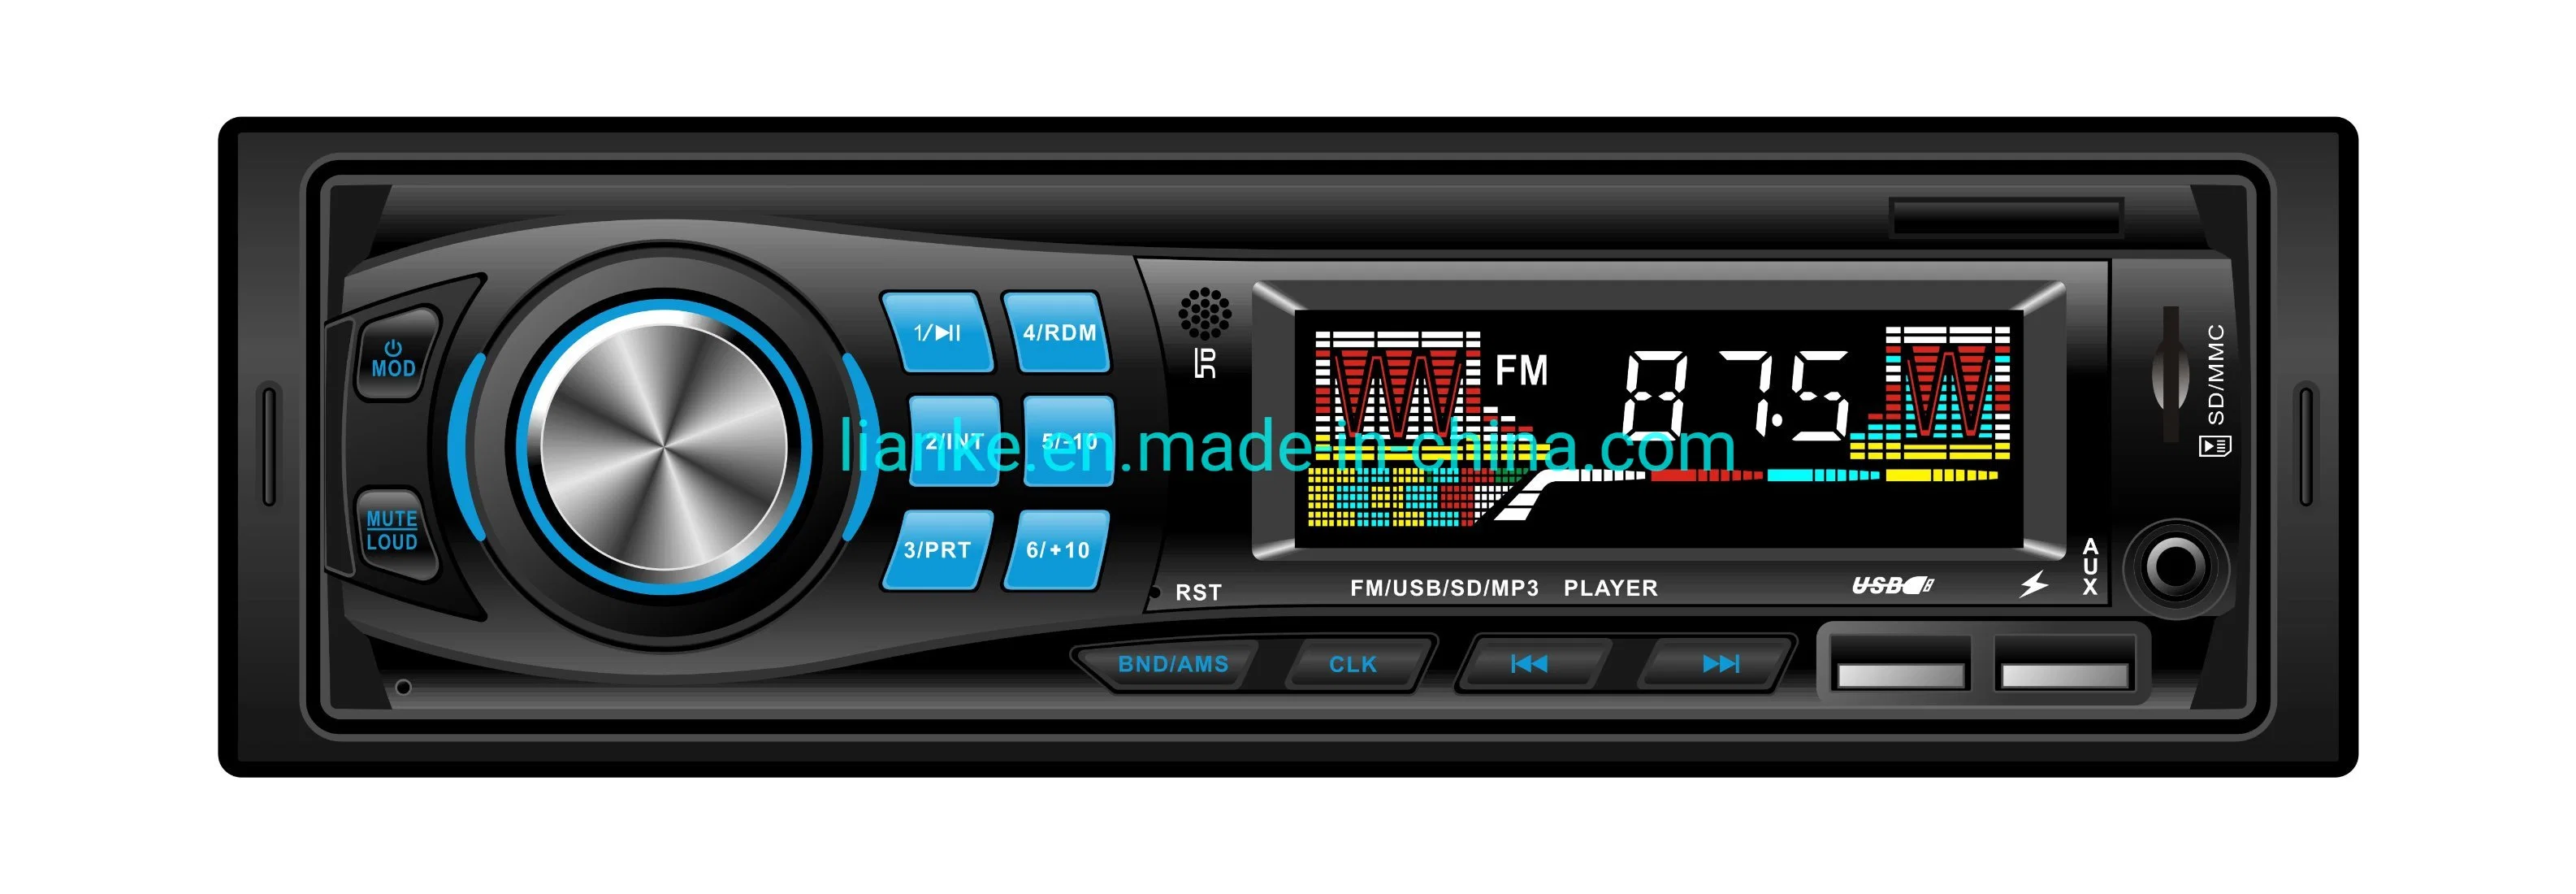 Carro Multimedia player de áudio MP3 com USB/FM